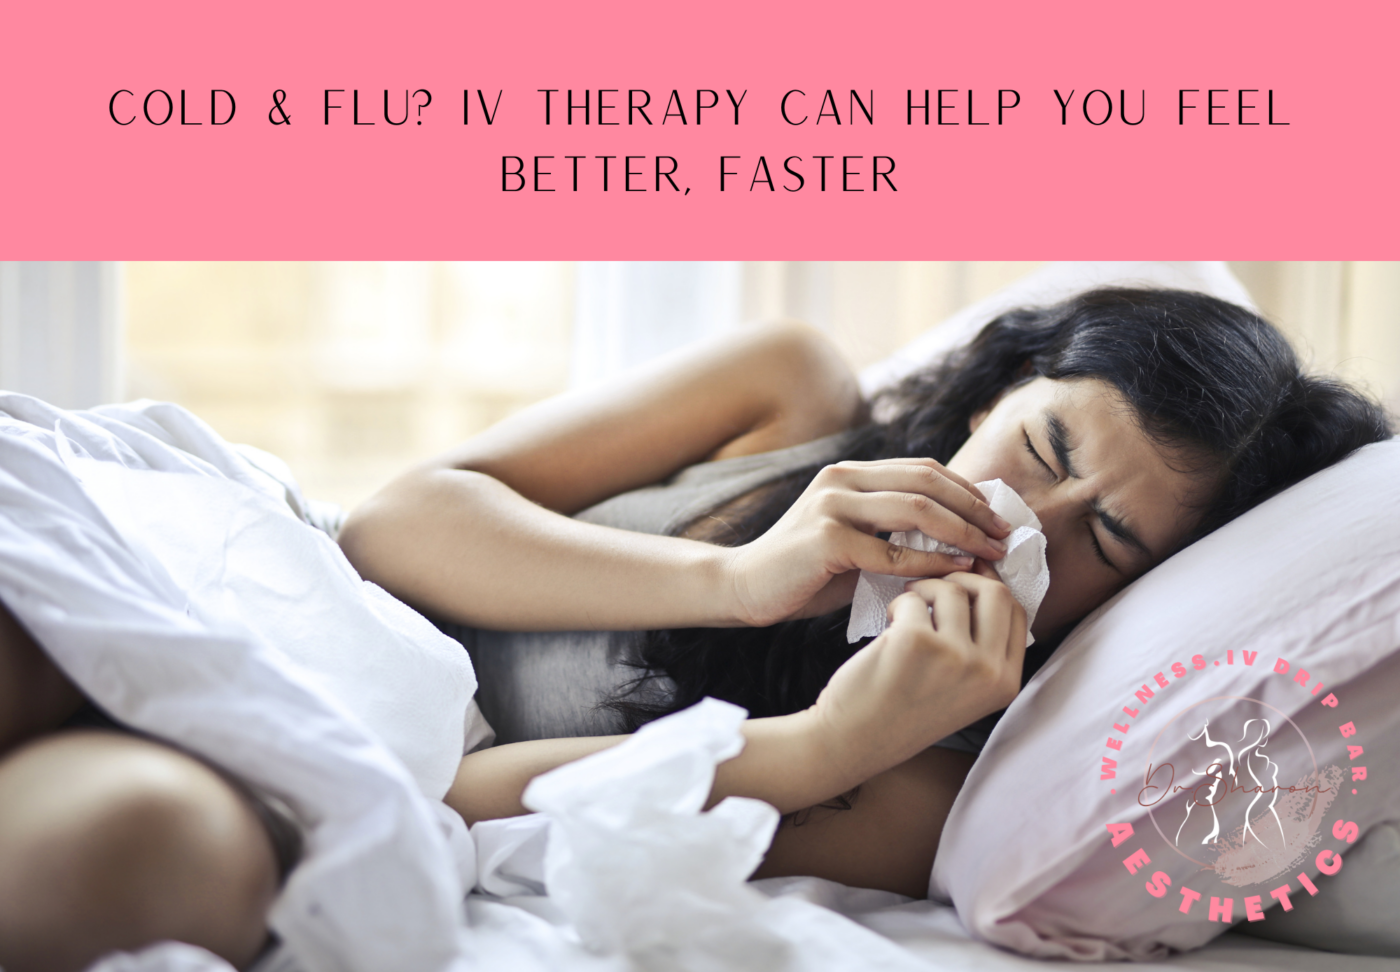 Improve your sleep with BHRT.